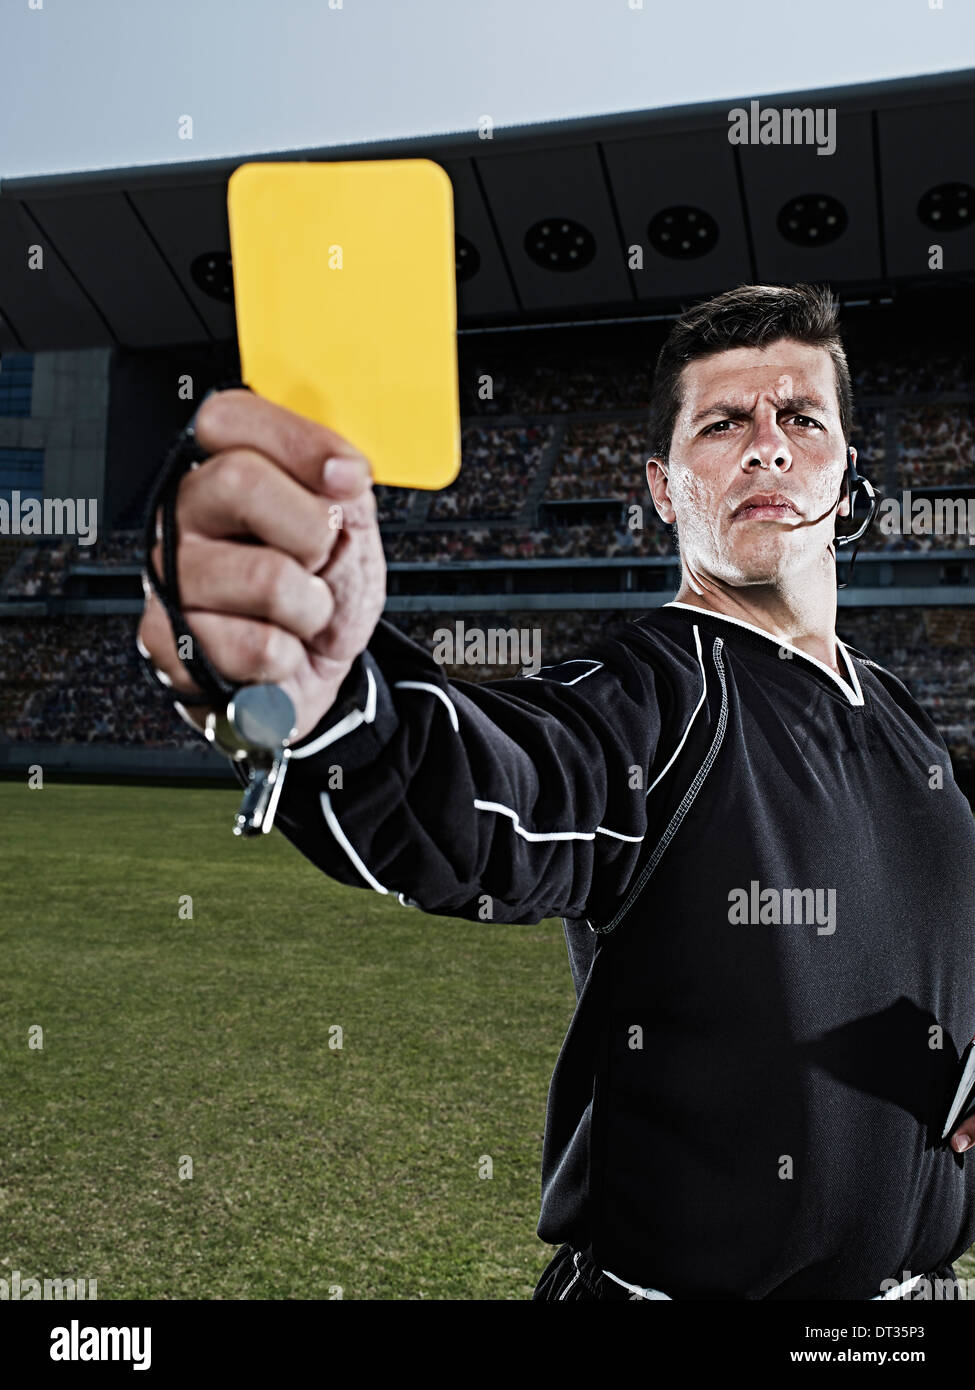 Referee flashing yellow card on soccer field Stock Photo